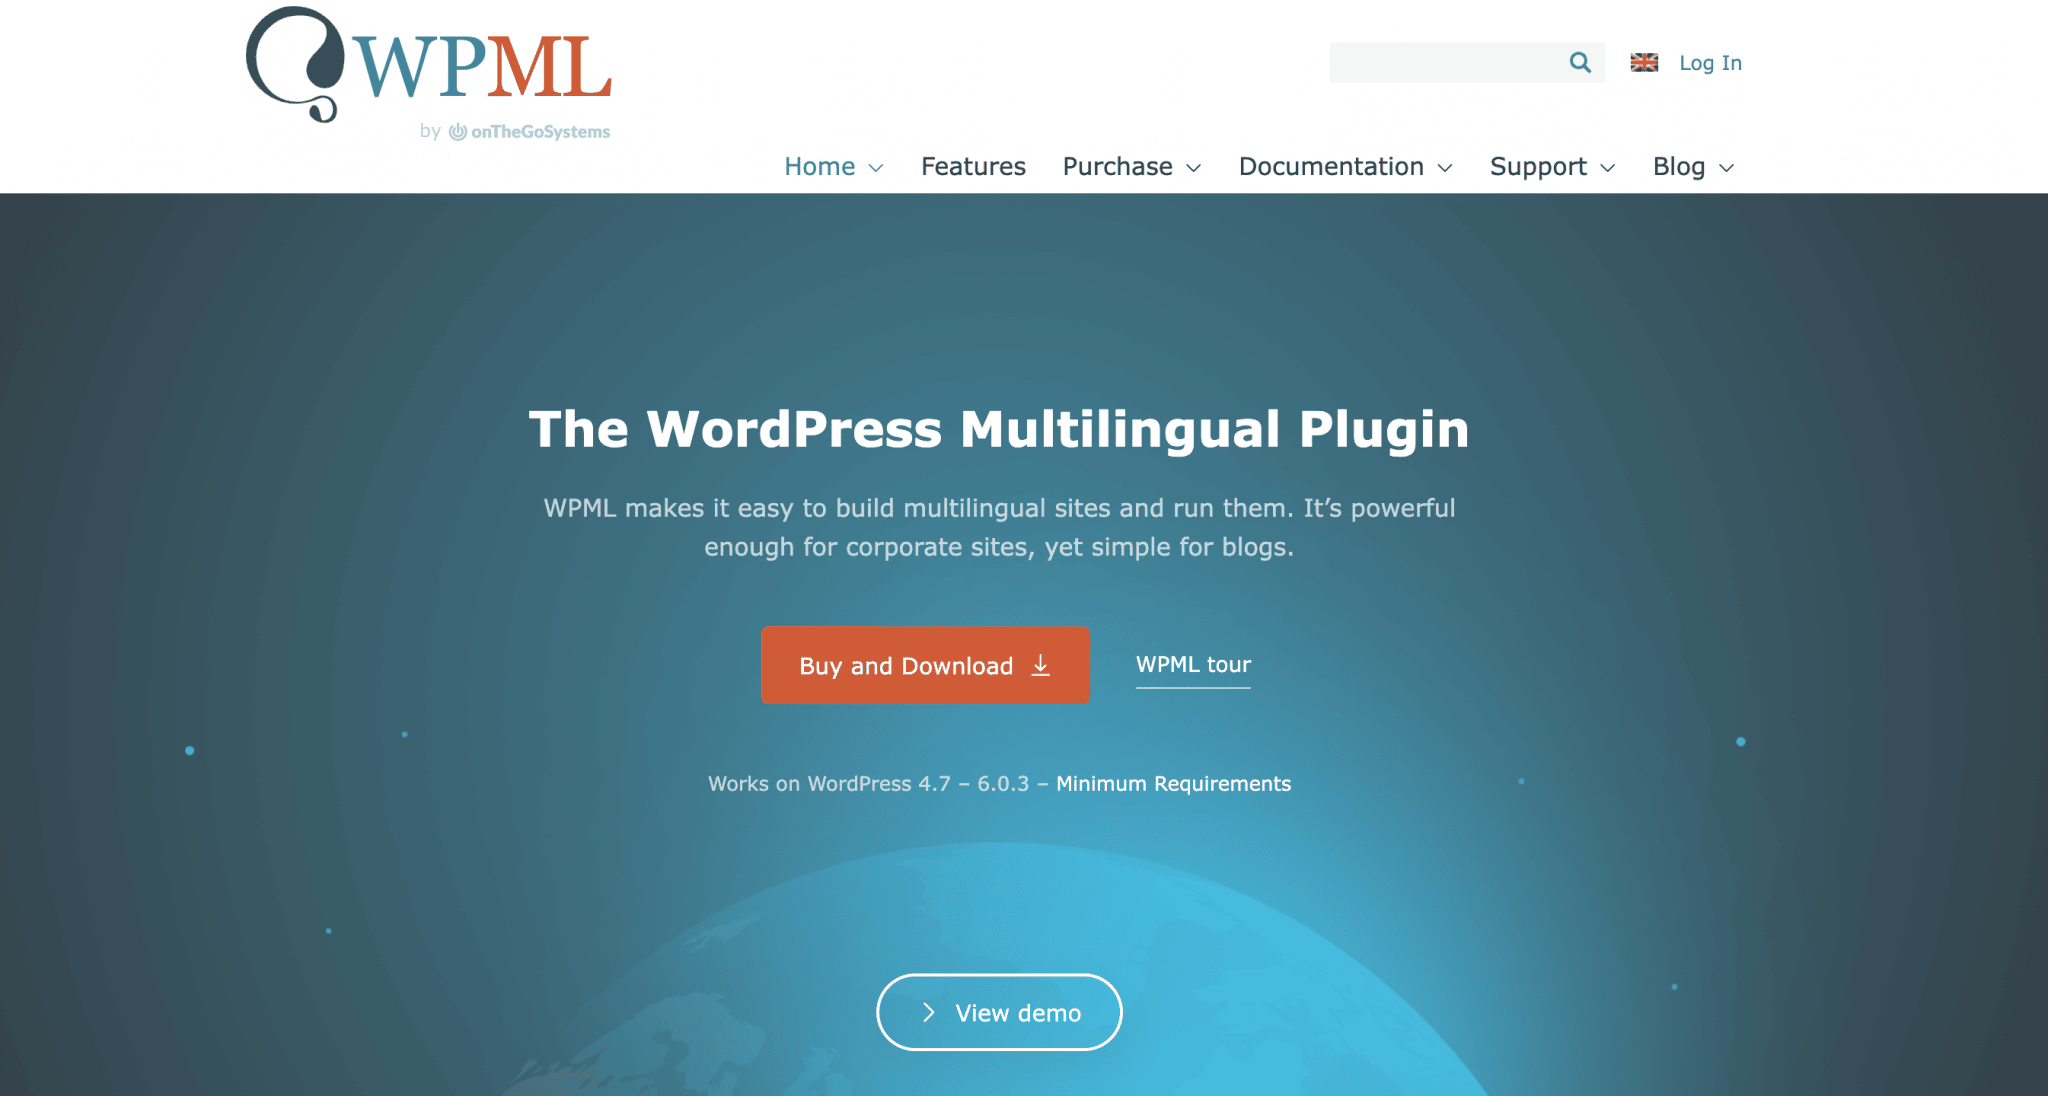 WPML is the most popular multilingual WordPress plugin.